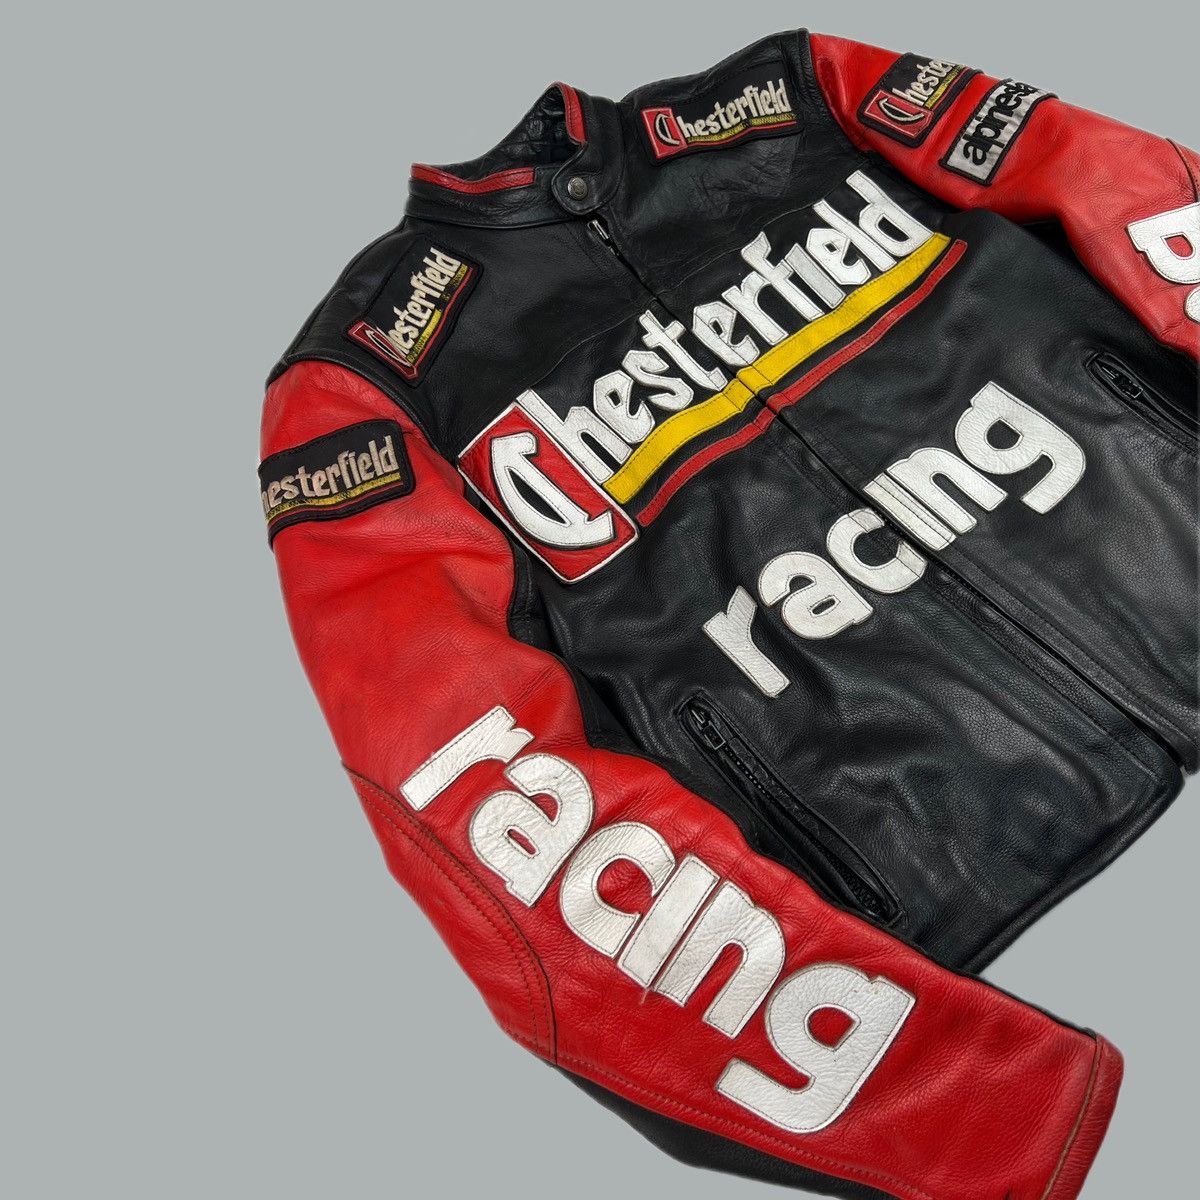 Avant Garde Chesterfield vintage racing leather jacket | Grailed